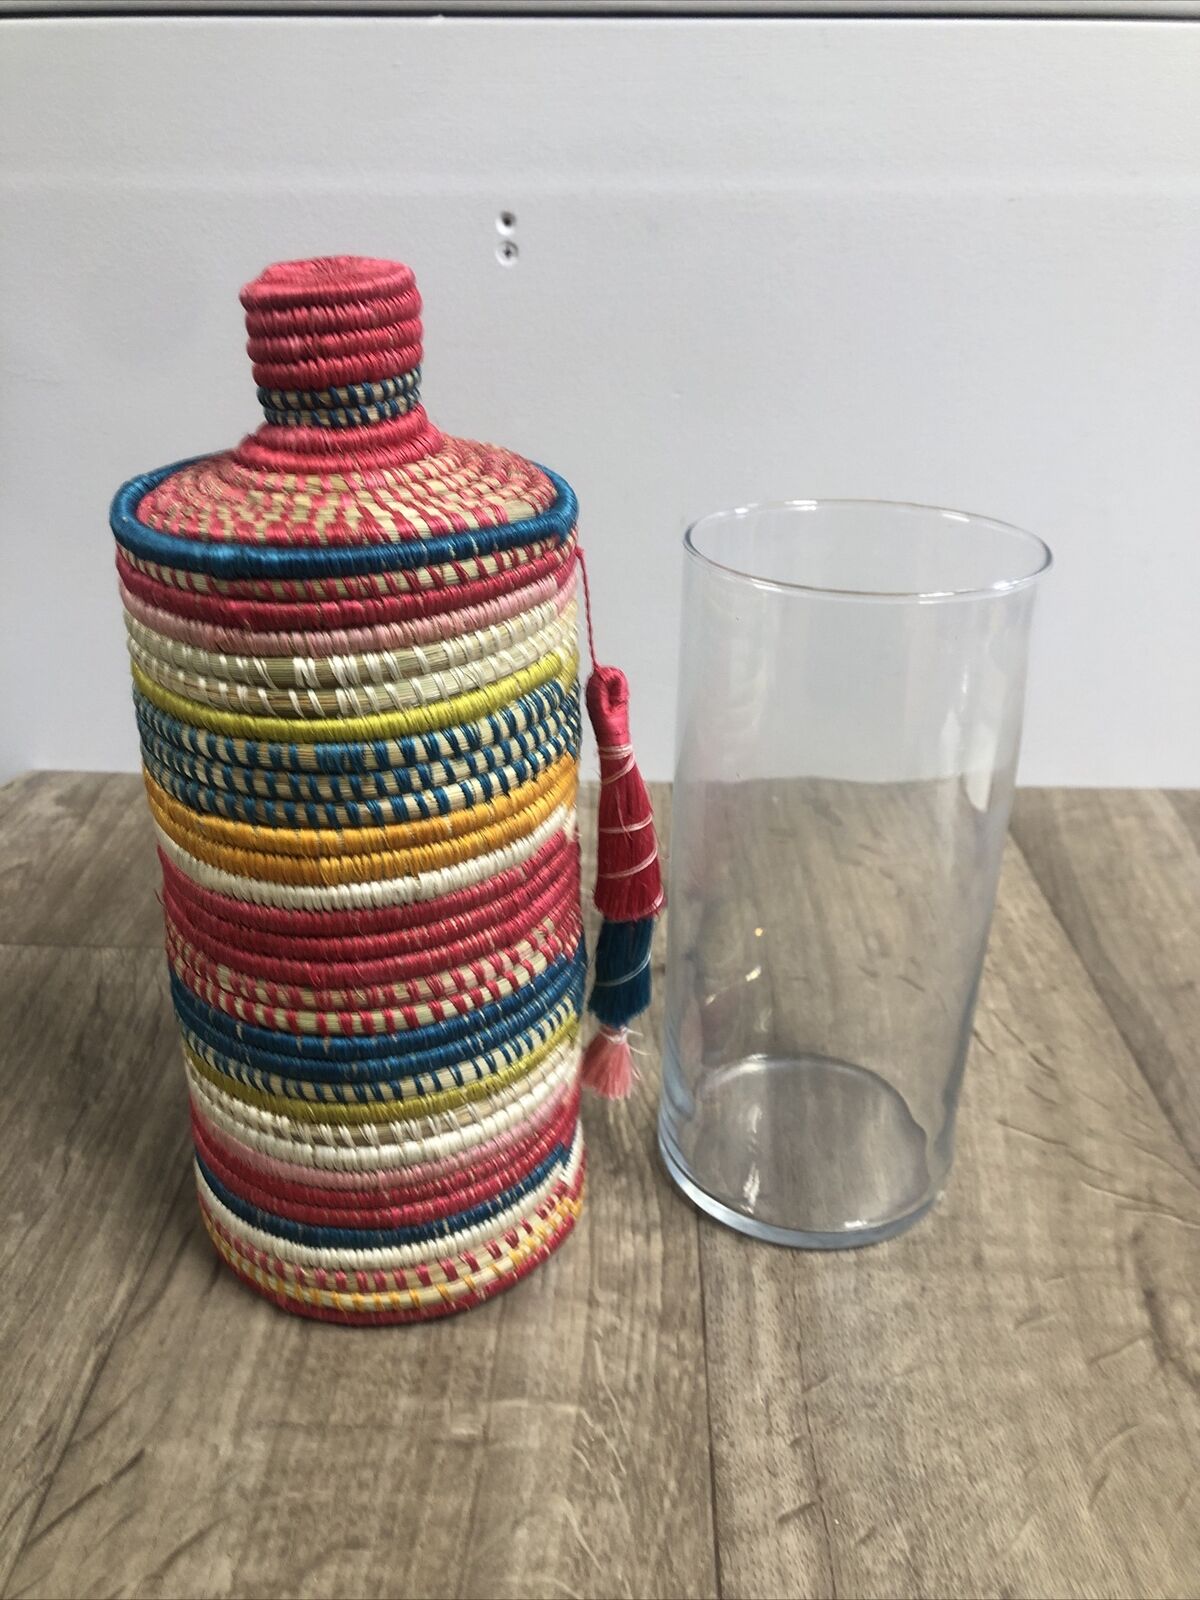 Coil Weave Basket Handmade Colorful Tassels Lid Rwanda Glass Insert Artisan A1